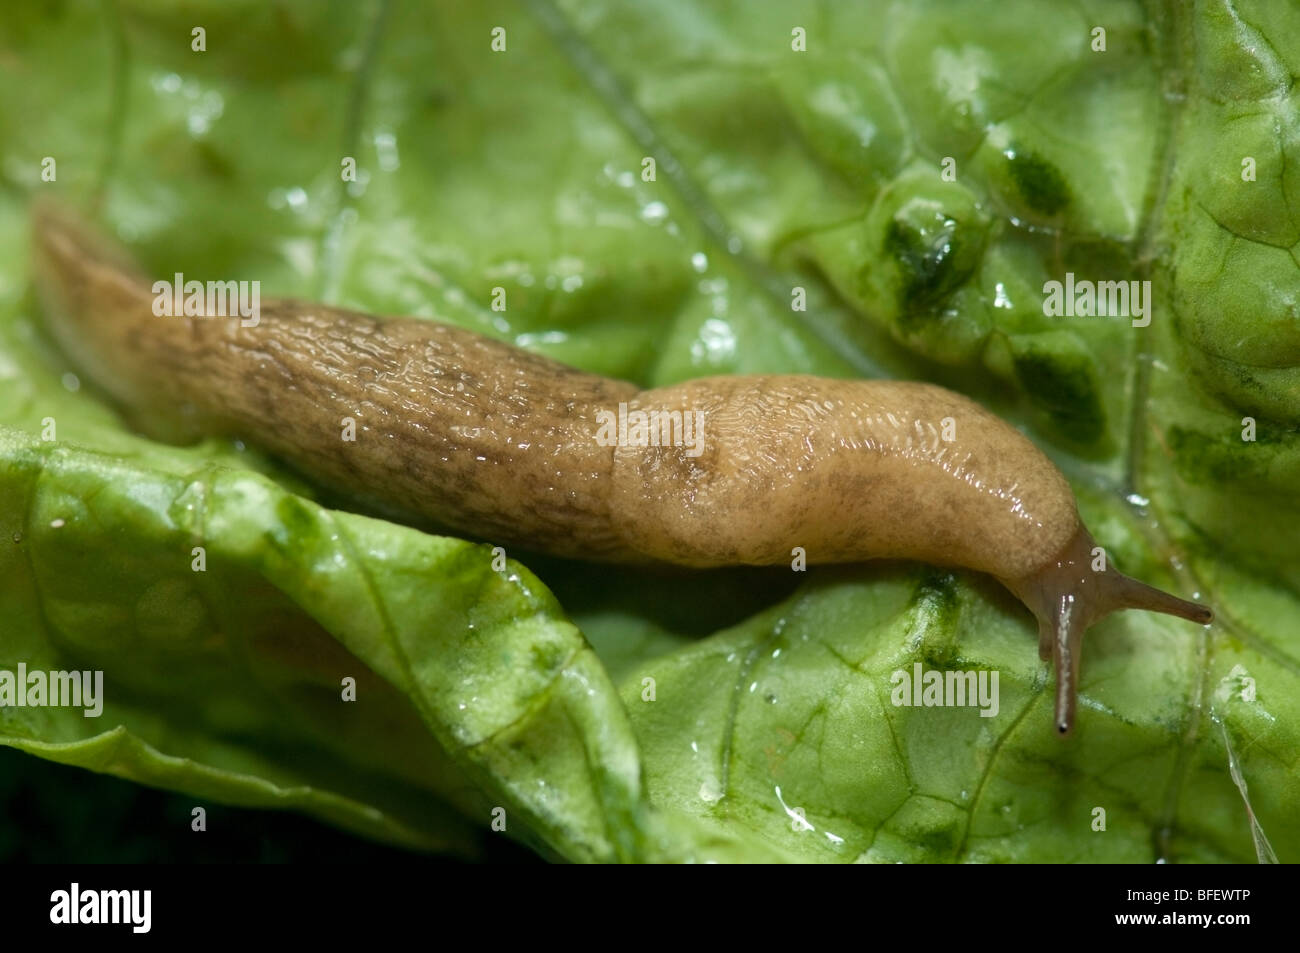 Grey garden slug (Deroceras reticulatum) on lettuce leaf in a garden, Saskatchewan, Canada Stock Photo